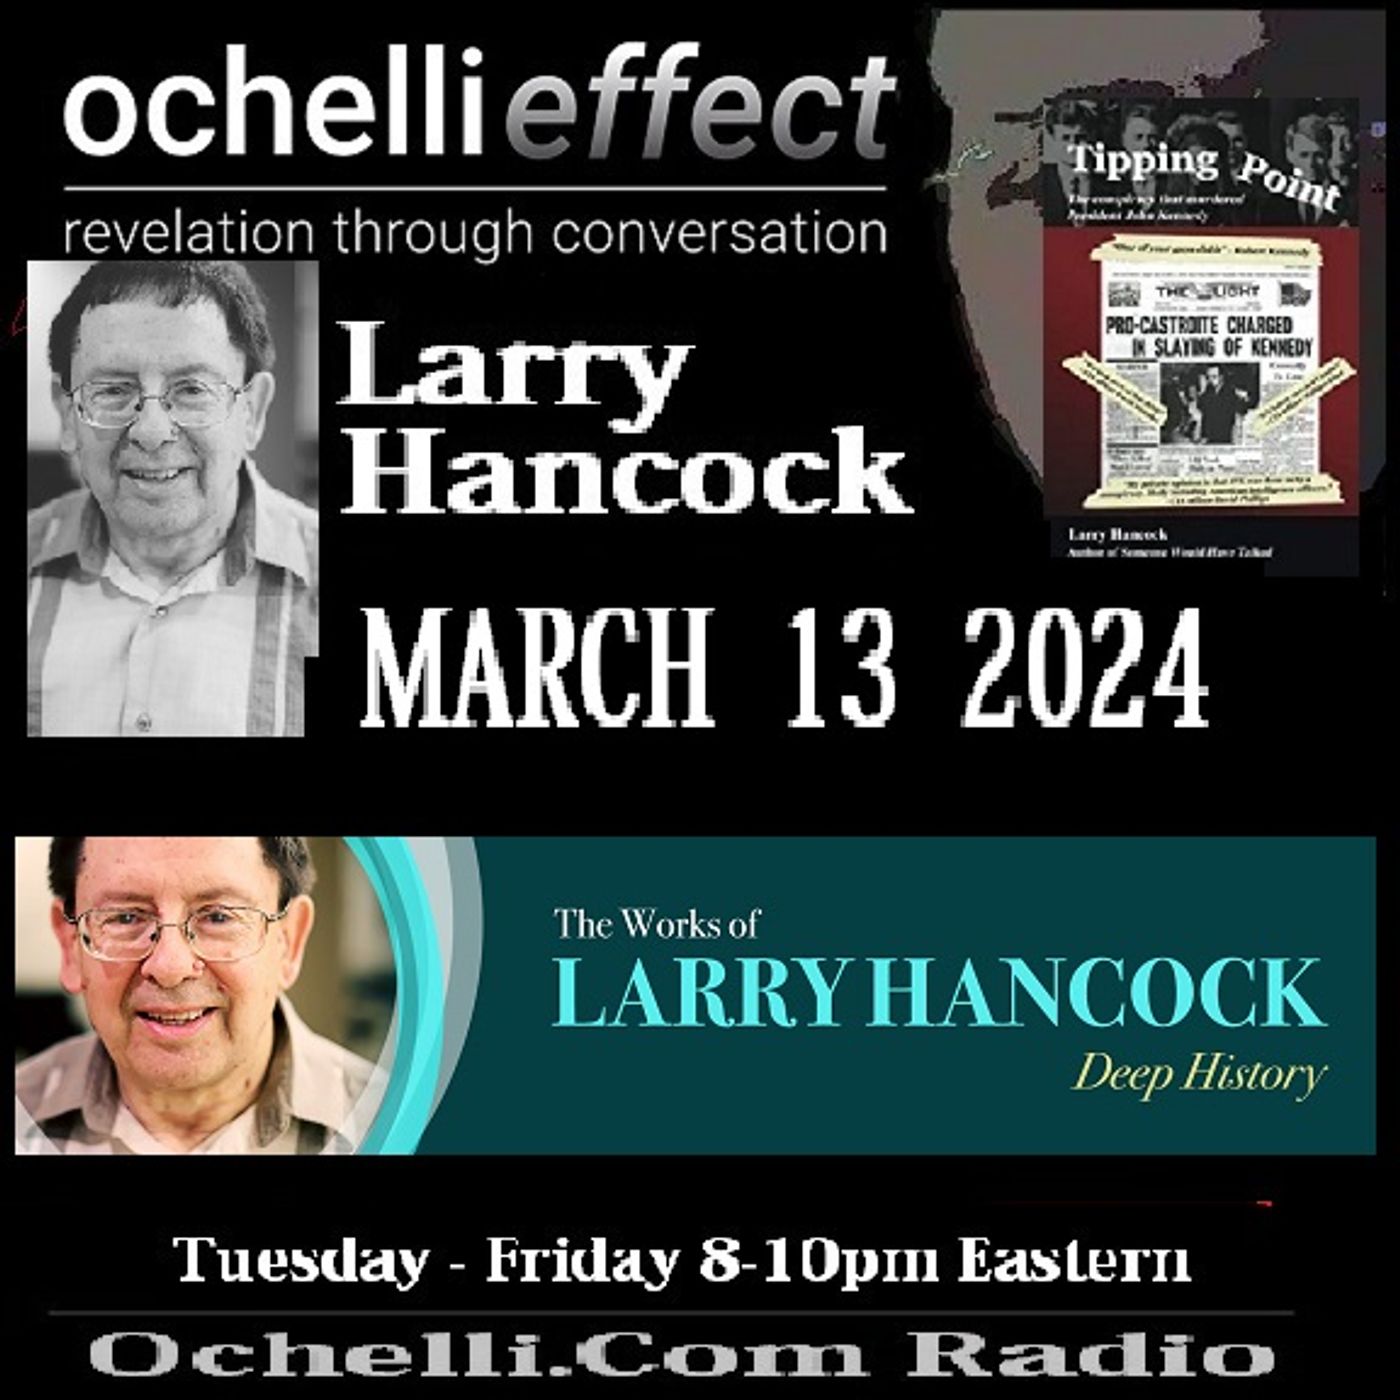 The Ochelli Effect 3-13-2024 Larry Hancock